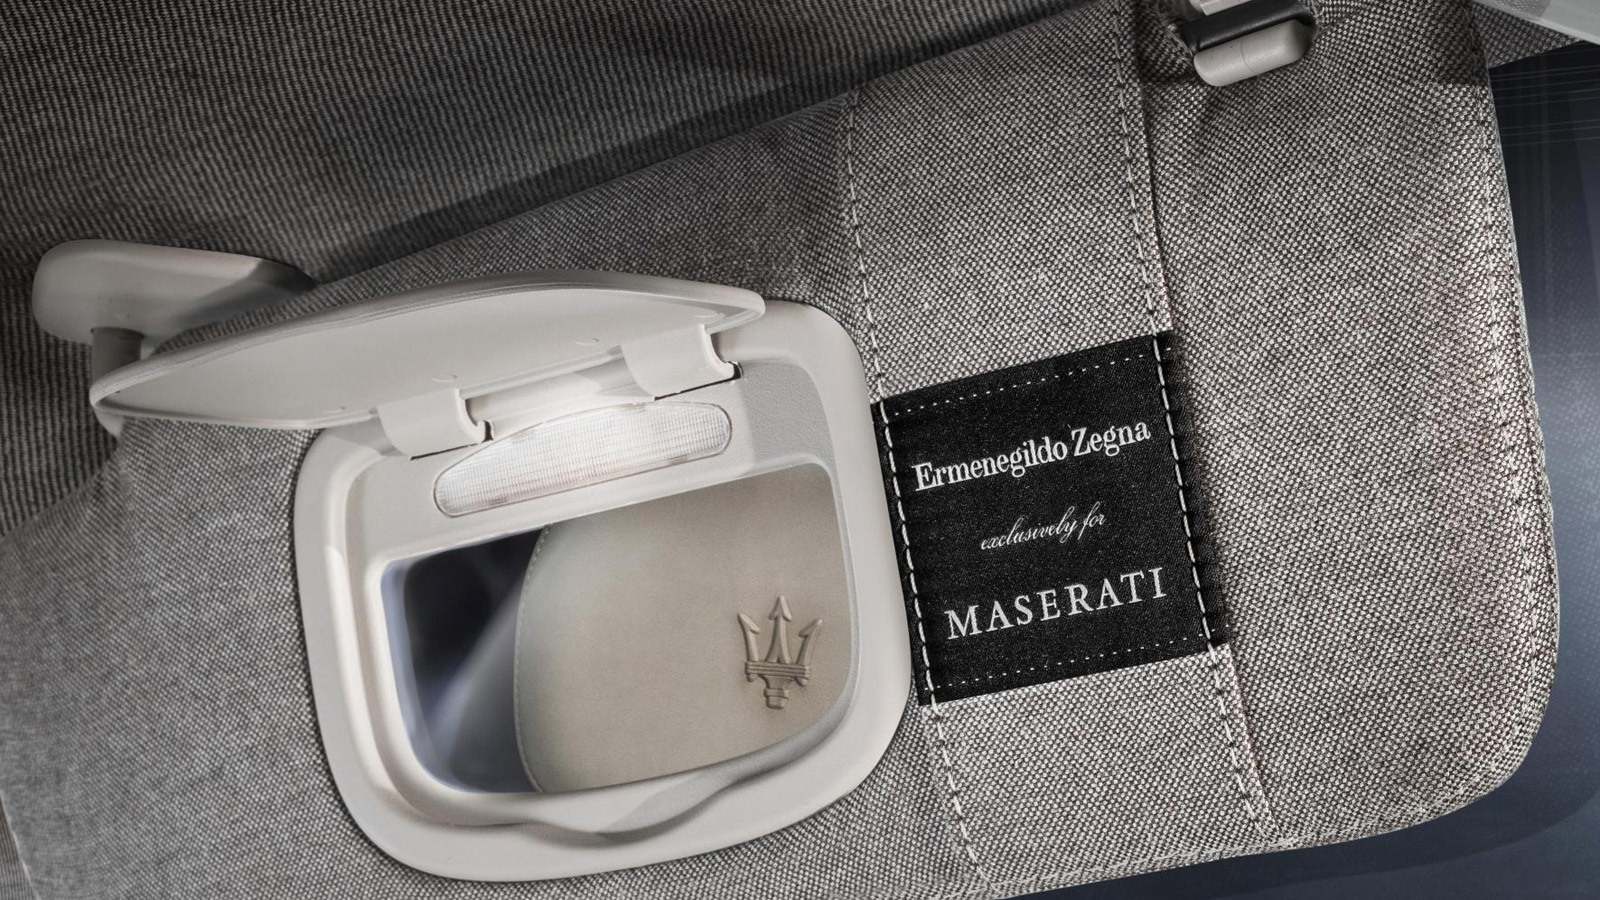 Maserati Quattroporte Ermenegildo Zegna Limited Edition concept, 2013 Frankfurt Auto Show